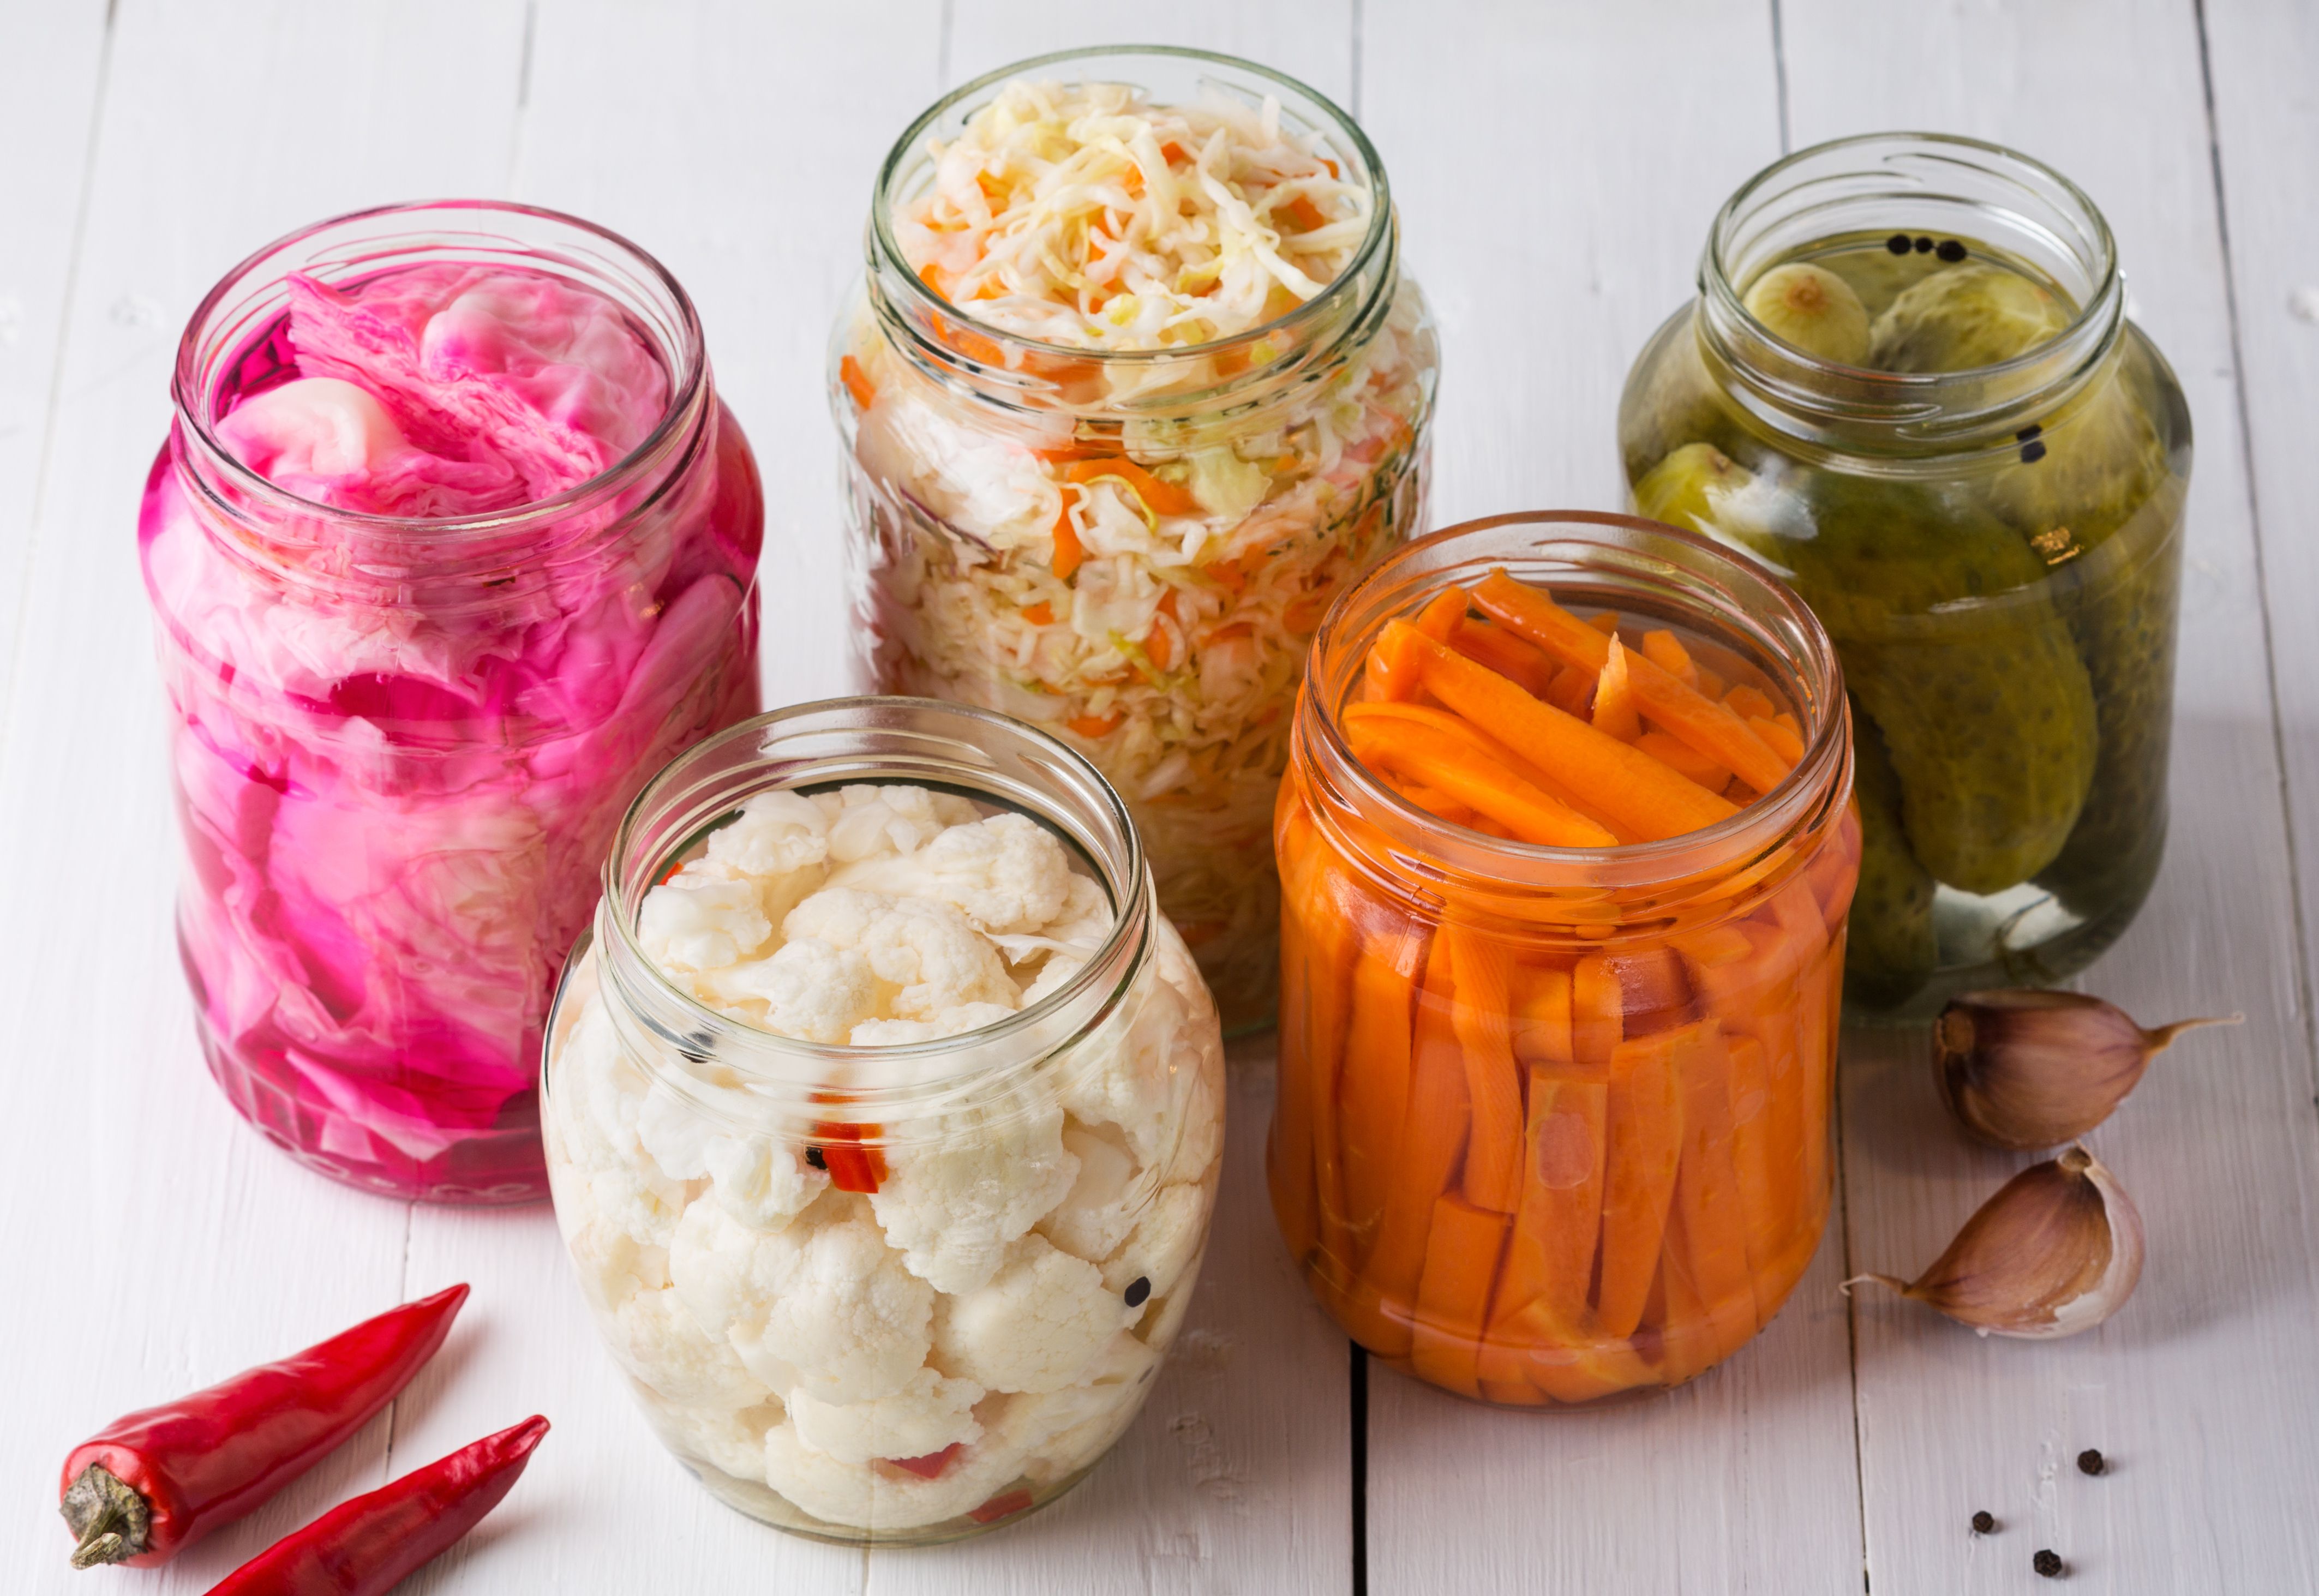 Gut health and fermentation